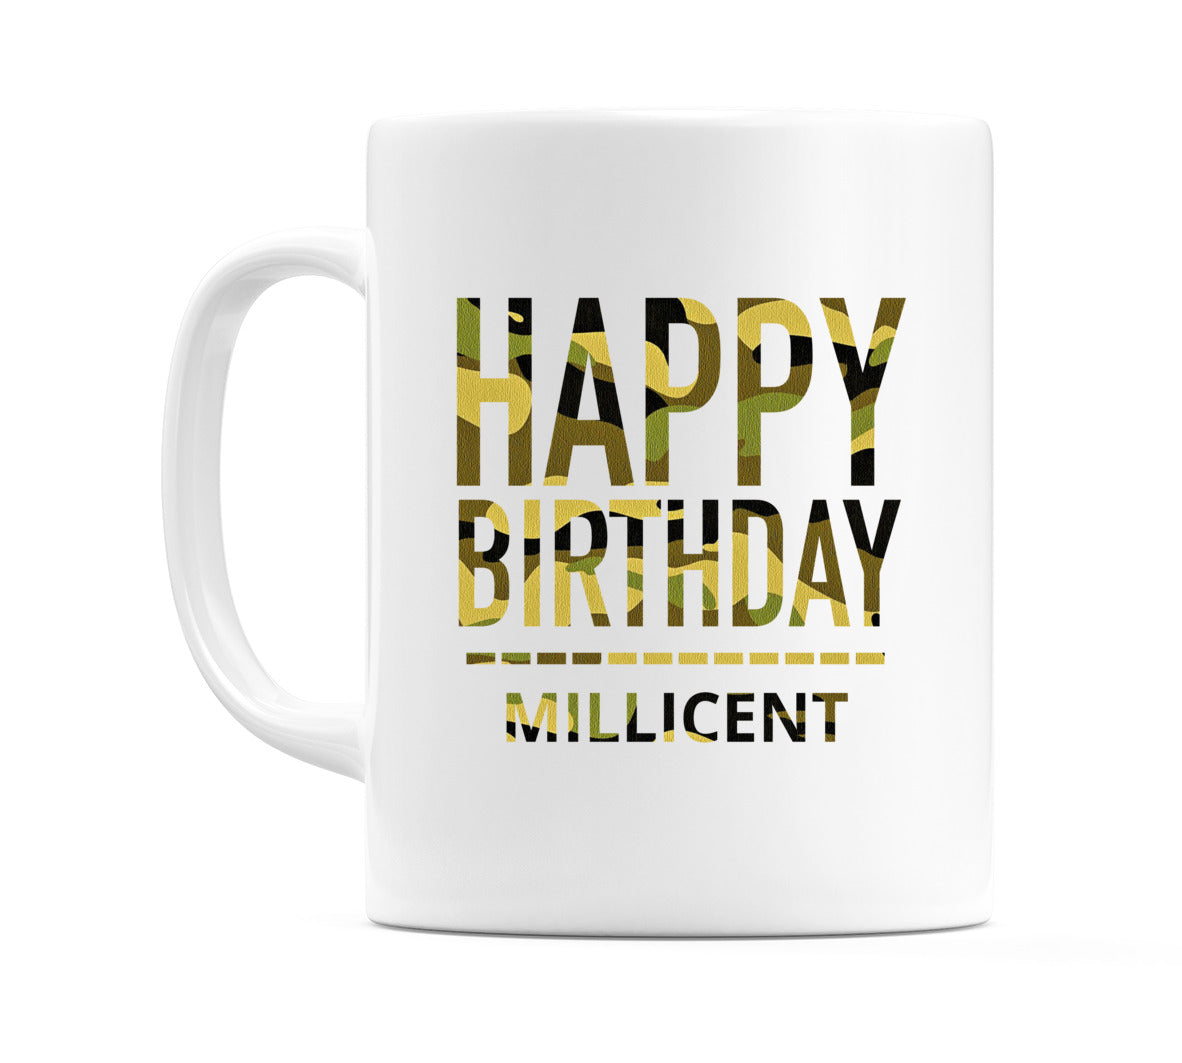 Happy Birthday Millicent (Camo) Mug Cup by WeDoMugs